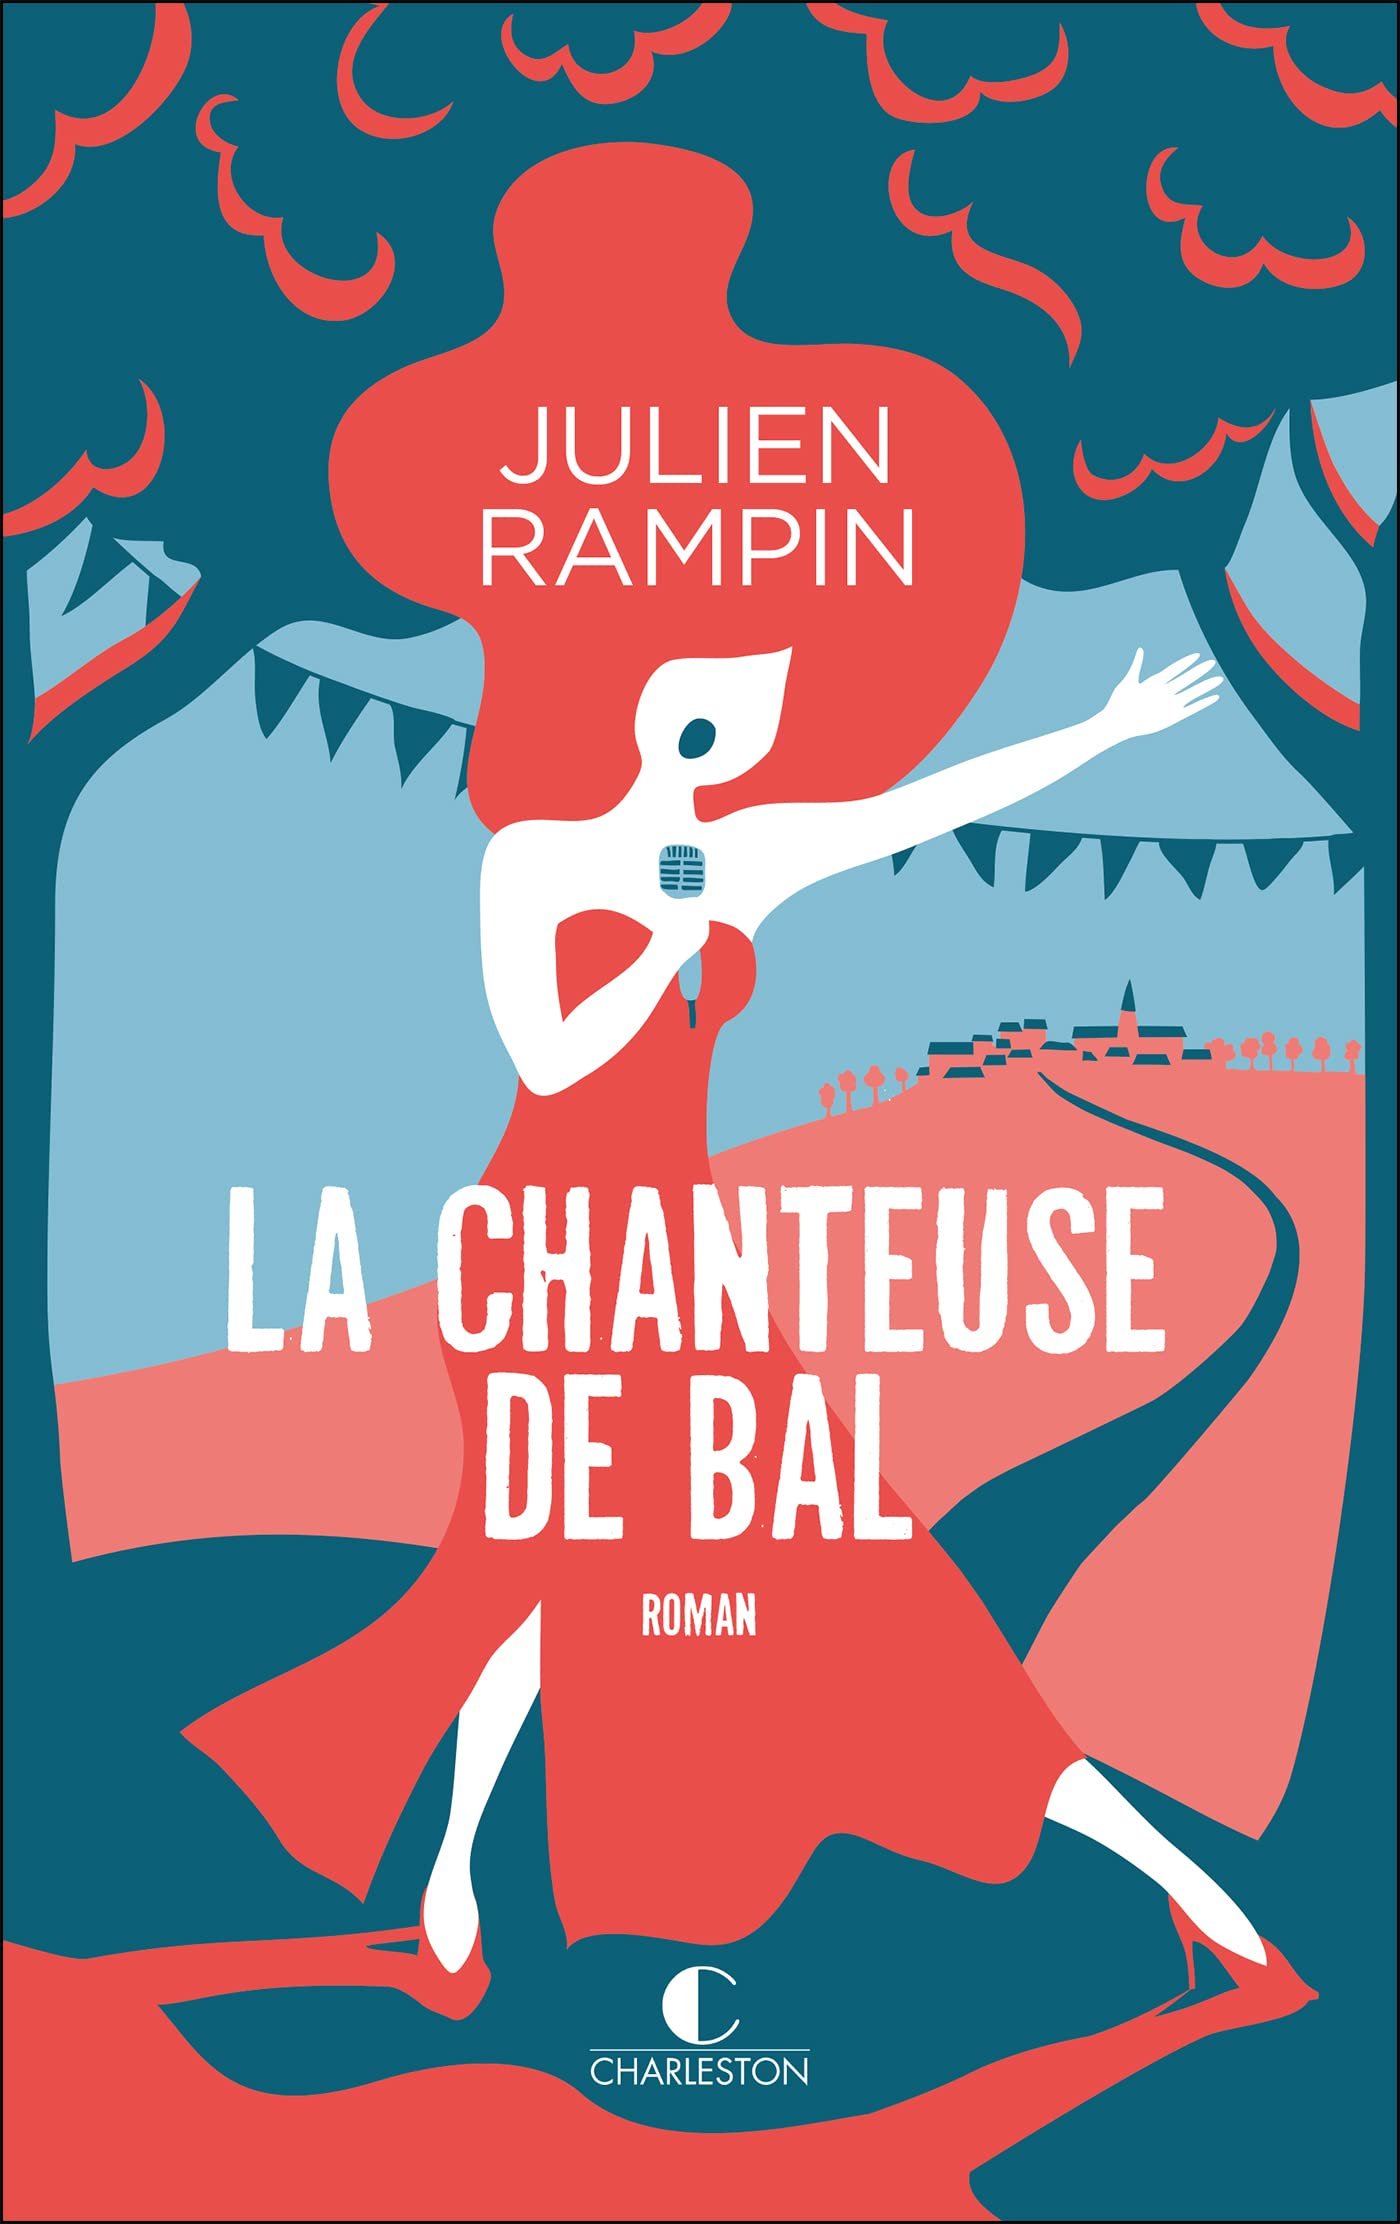 Julien Rampin – La Chanteuse de bal